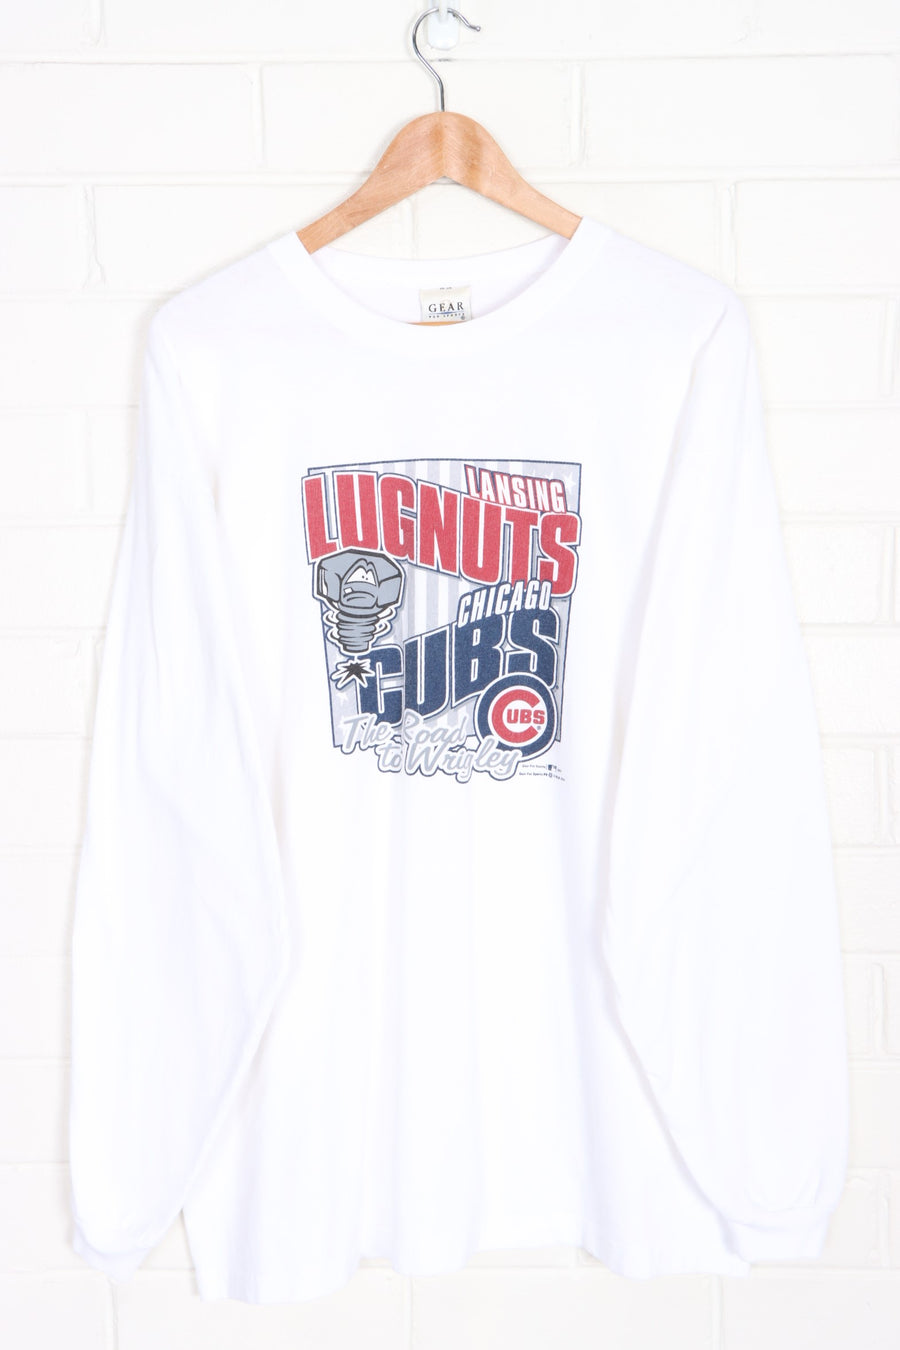 MLB MiLB Cubs Lugnuts "Road to Wrigley" Long Sleeve T-Shirt (XL)